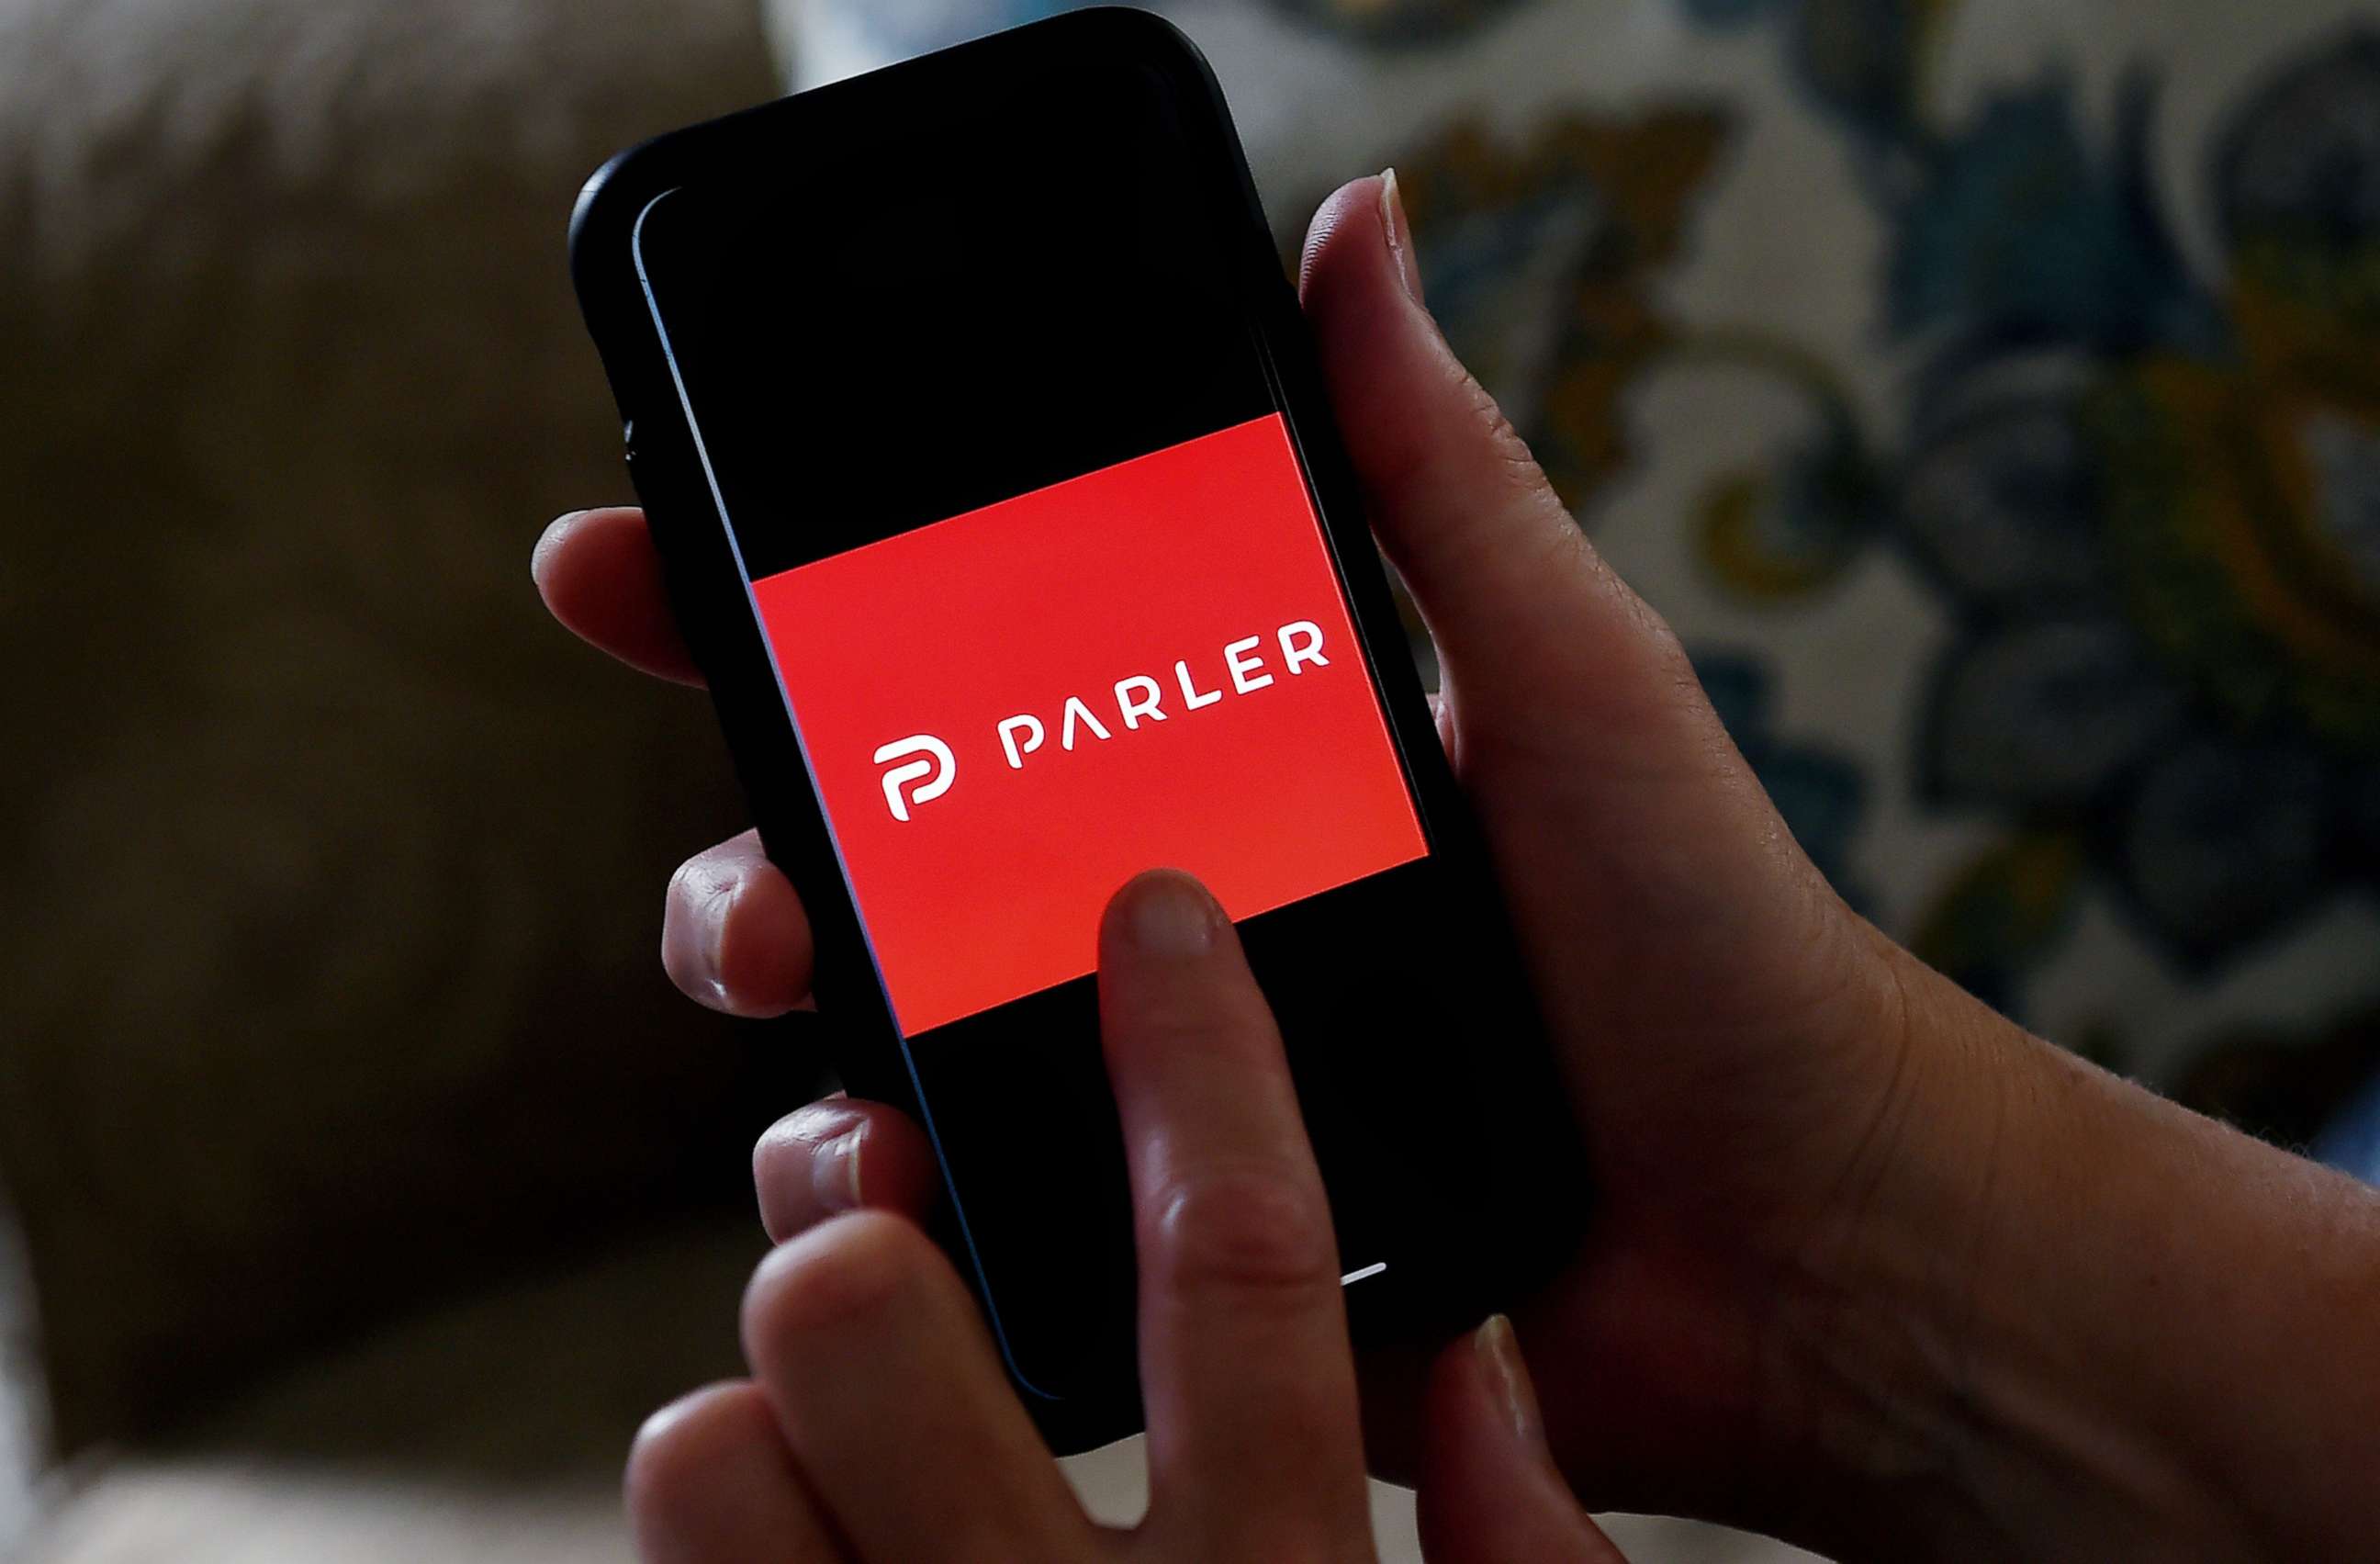 PHOTO: Parler logo displayed on a smartphone.